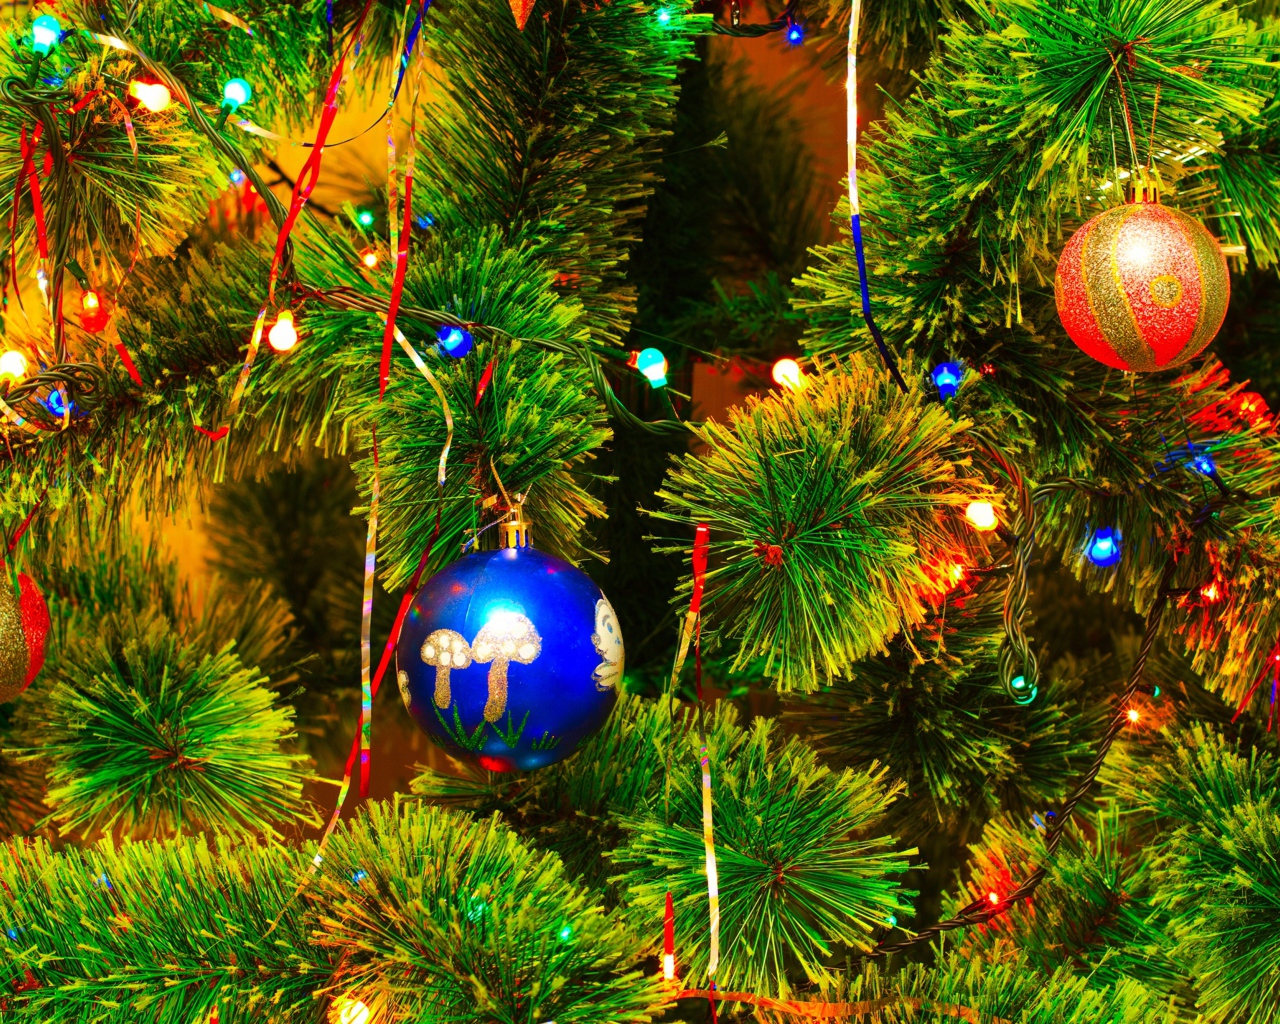 Christmas tree with blue ball